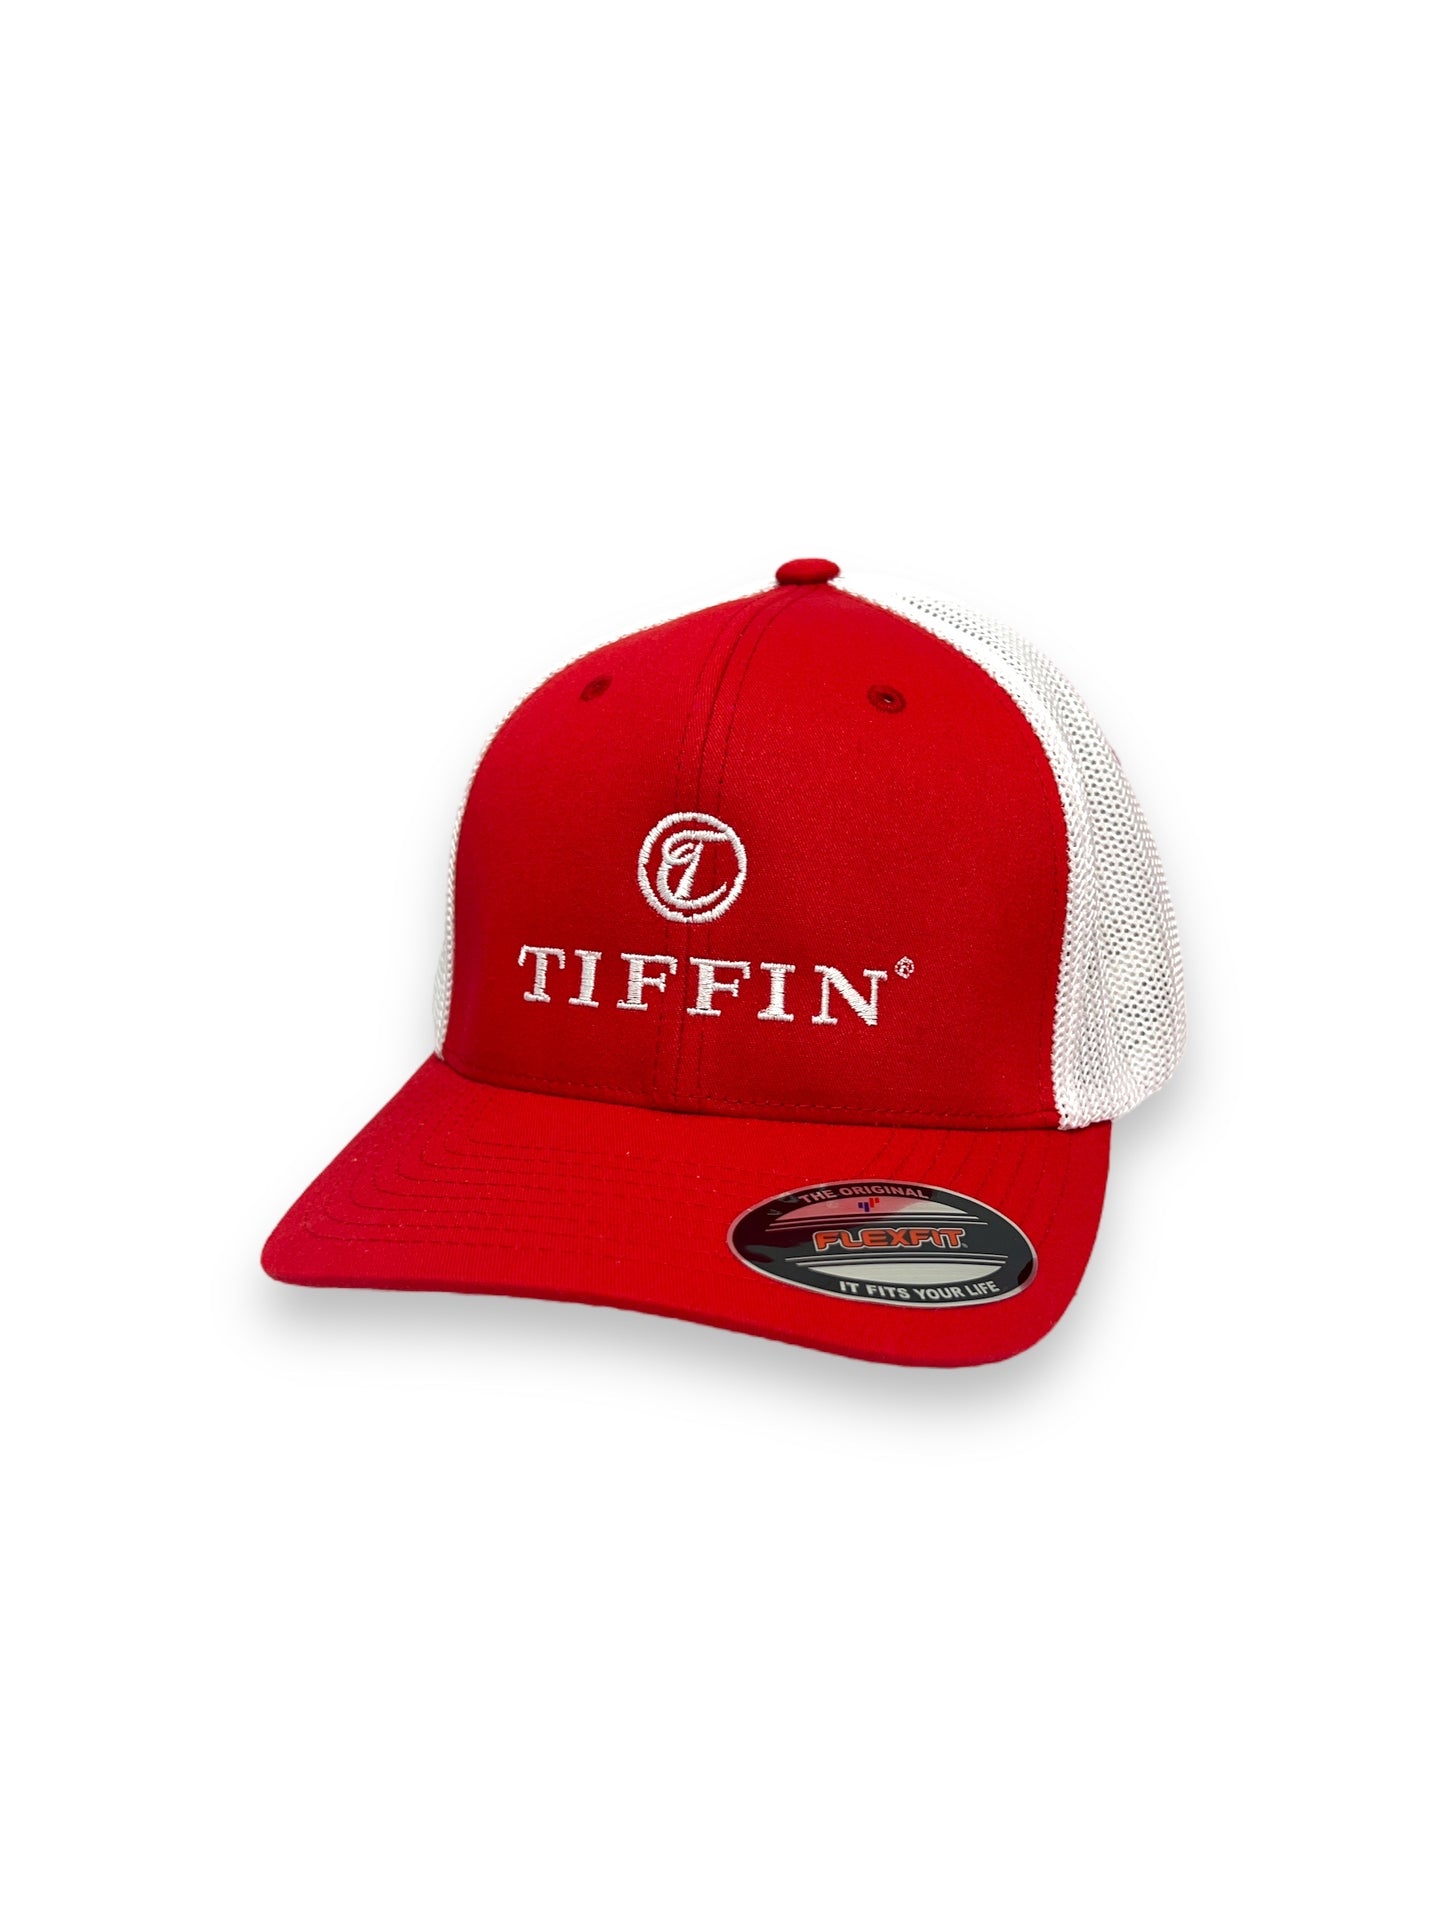 Hat - Tiffin Flex Fit